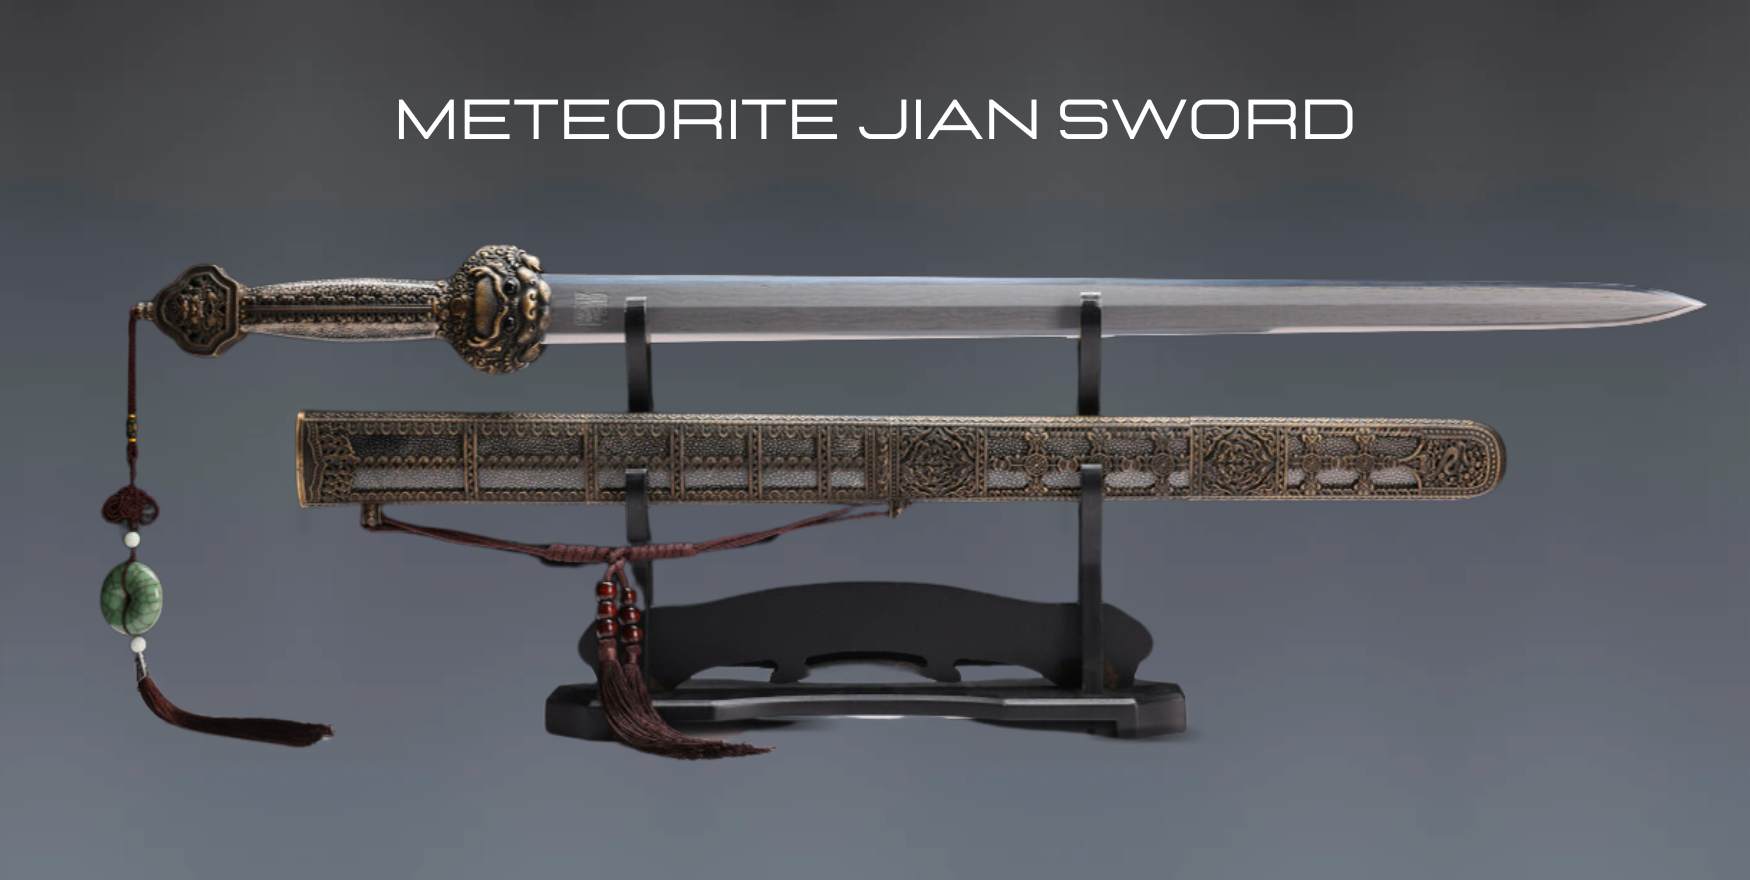 épée de météorite